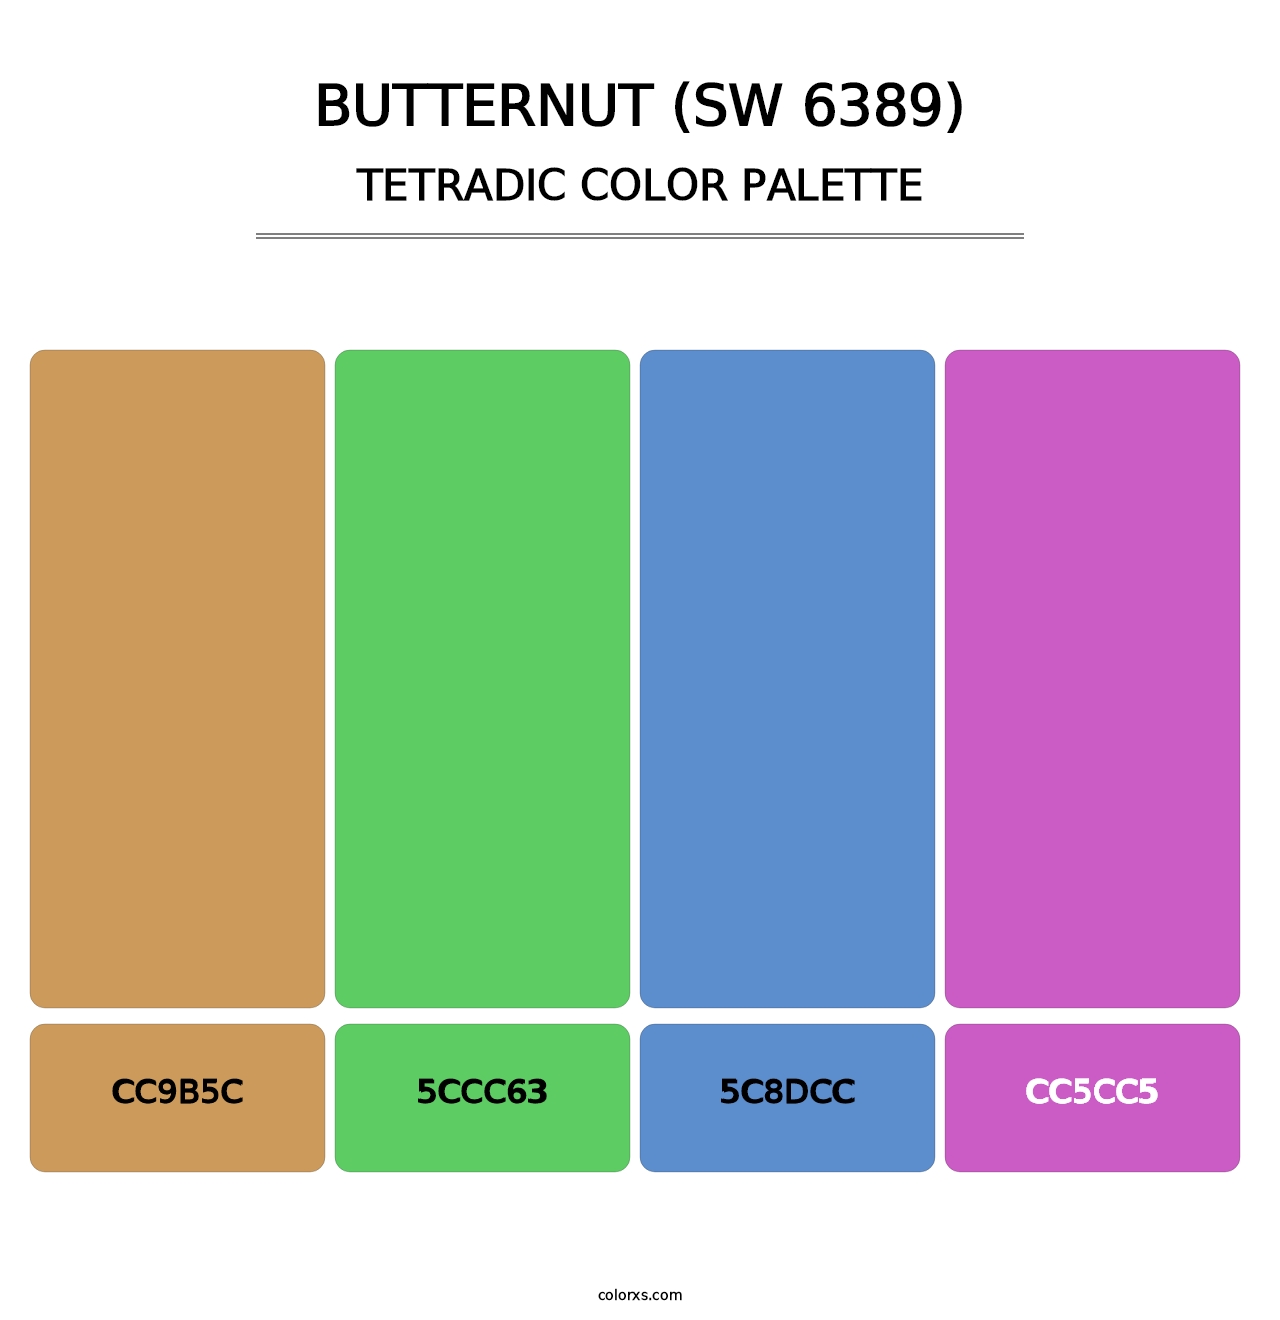 Butternut (SW 6389) - Tetradic Color Palette